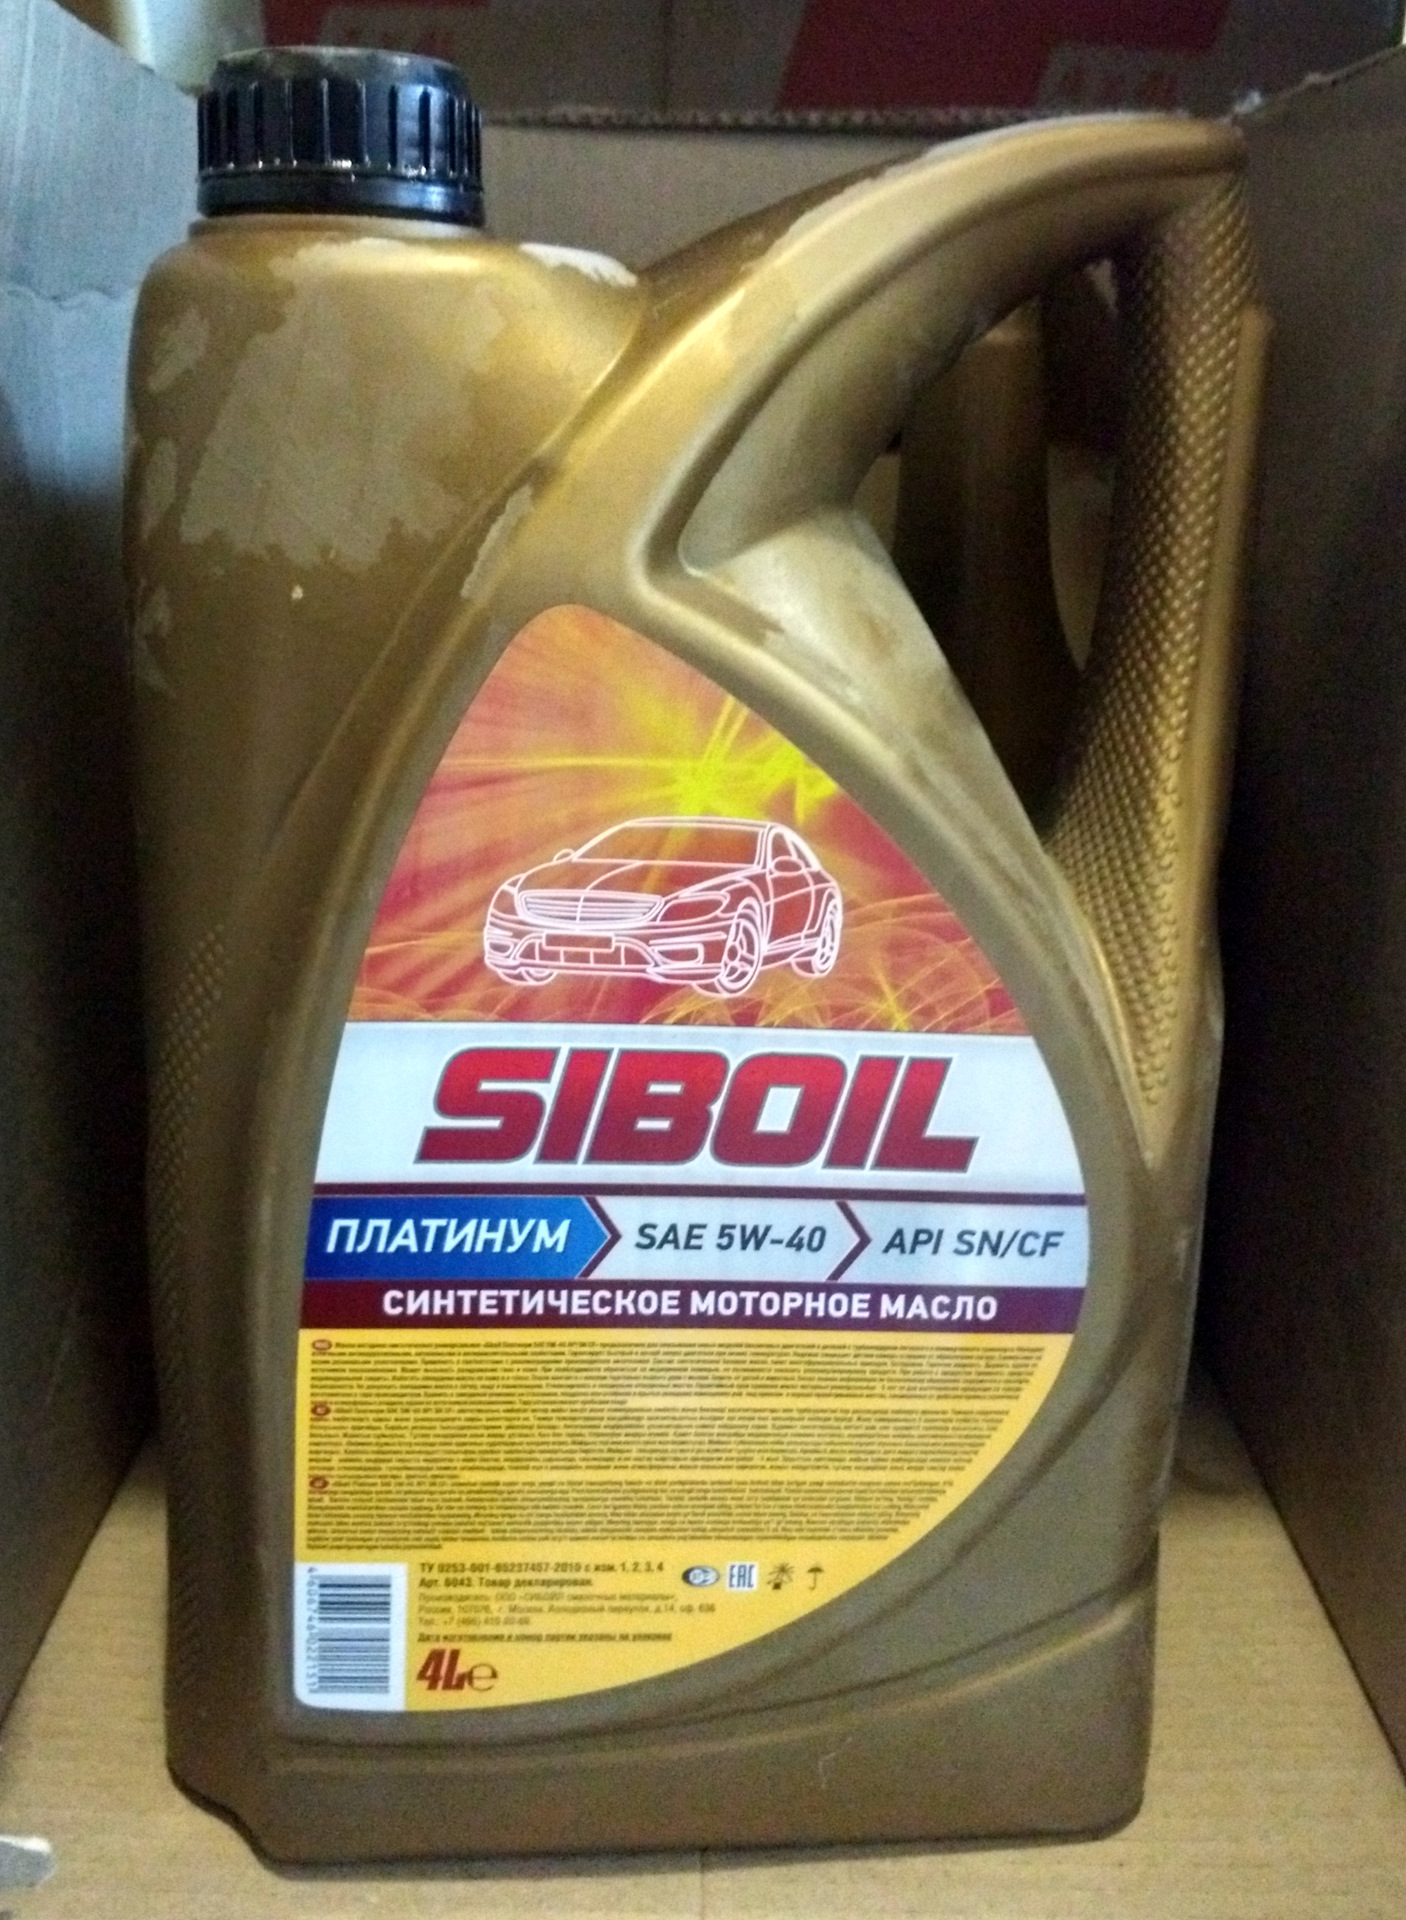 5w40 купить в красноярске. Моторное масло Сибойл 5w 40. Масло Siboil 5w-40 светофор. Масло моторное Sintec ( 5w40 .SAE Synt. 4 Л.). Масло Сибойл супер полусинтетика.